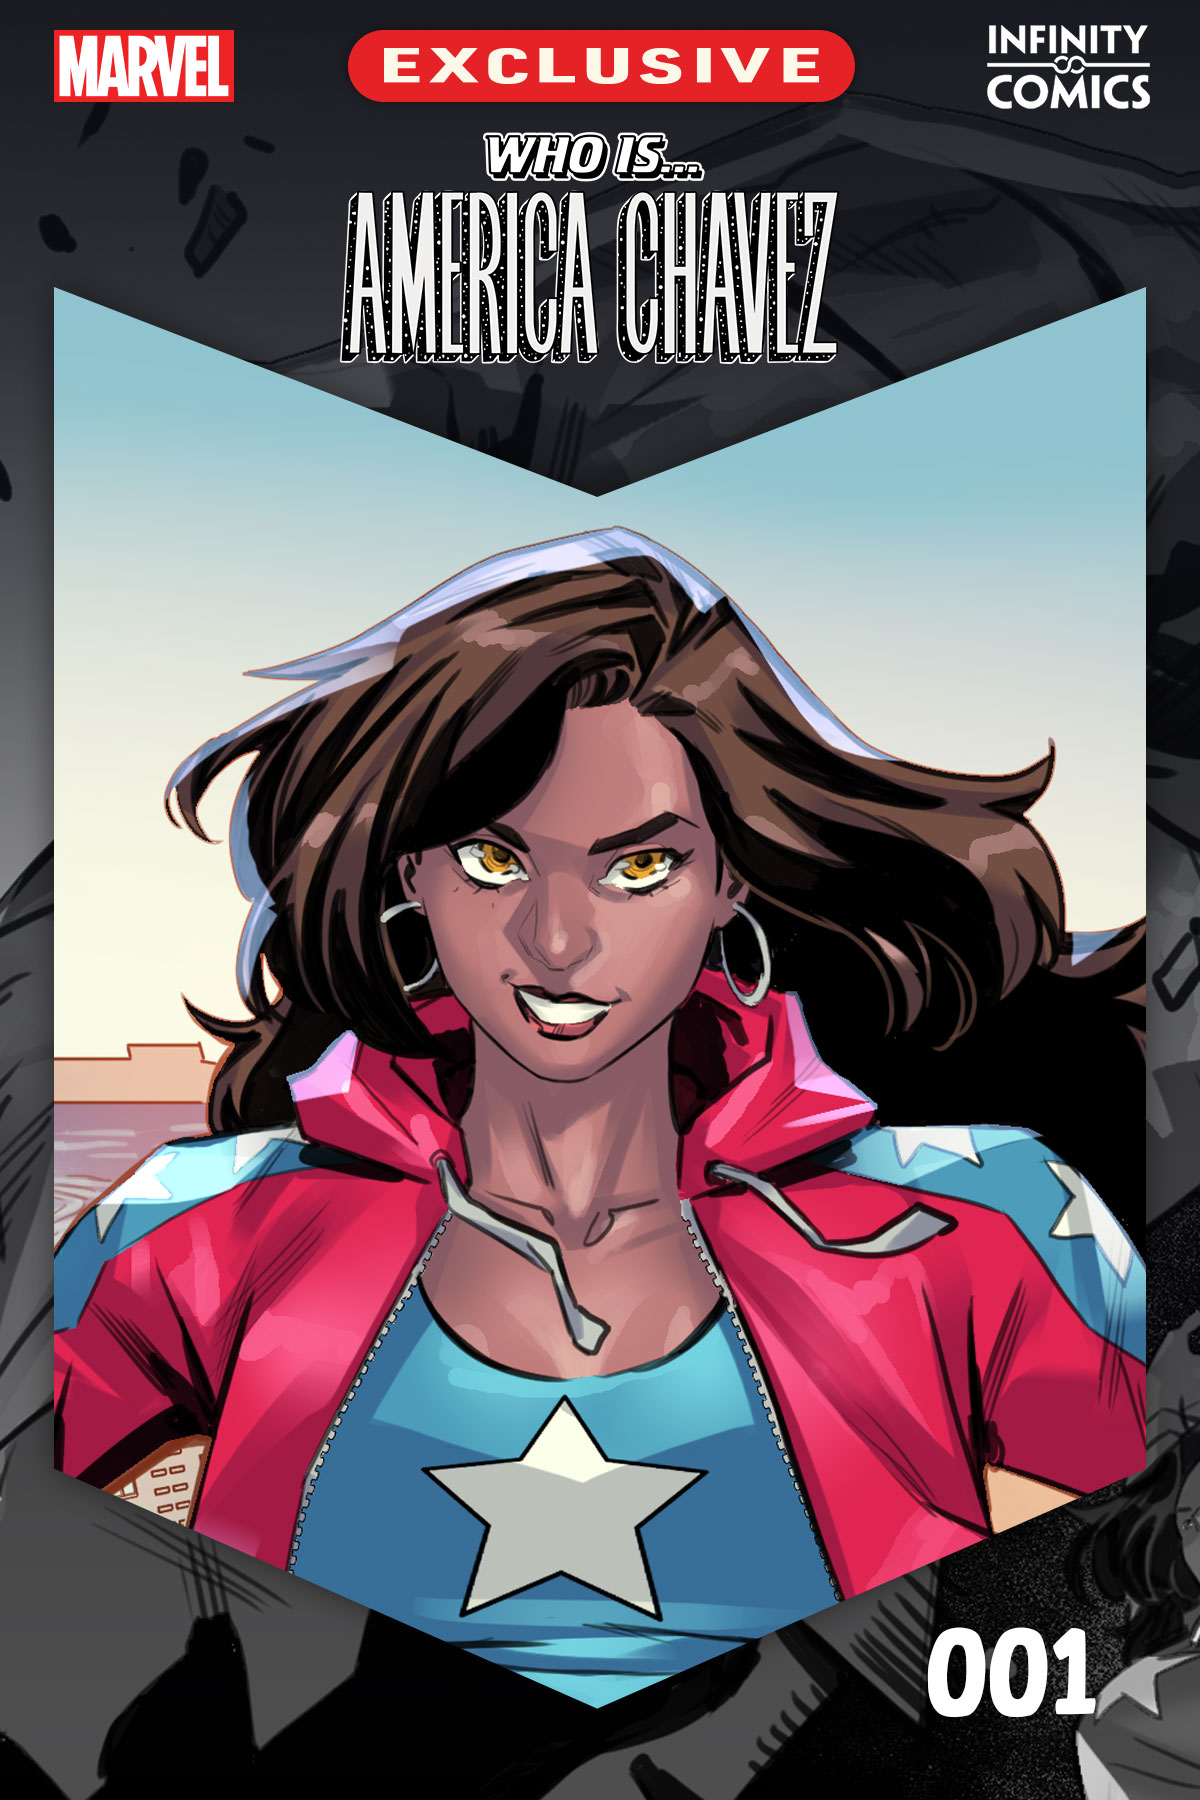 Who Is... America Chavez Infinity Comic (2022) #1